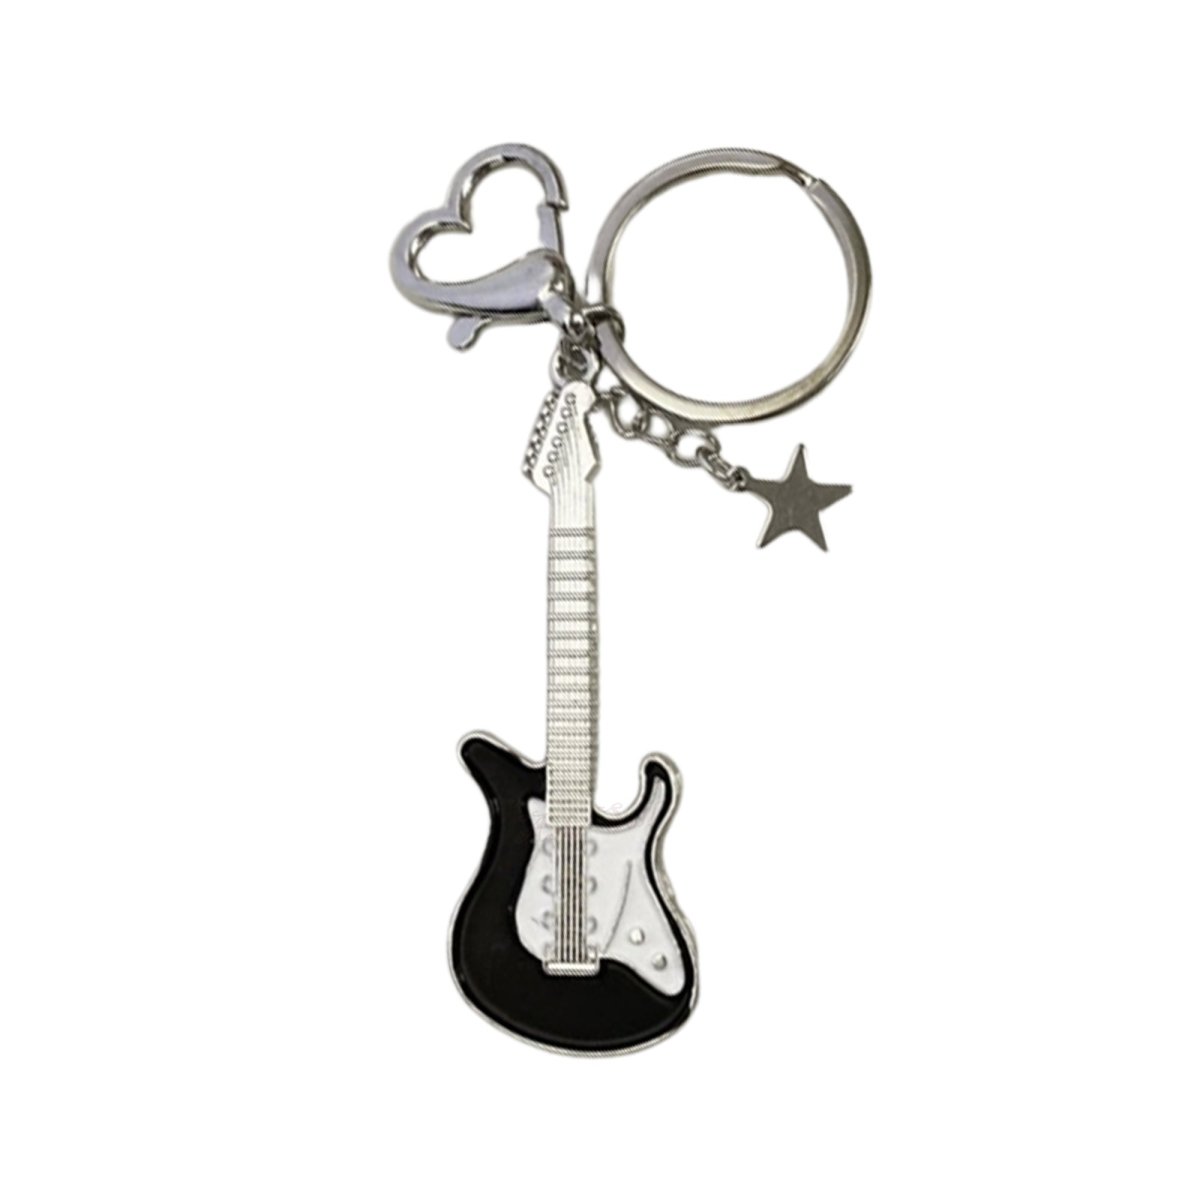 30mm Keyring Guitar Keychain 7.5cm Key Ring Key Chain Bag Accessory Holder Pendant Tag - Black White Star Heart - - Asia Sell